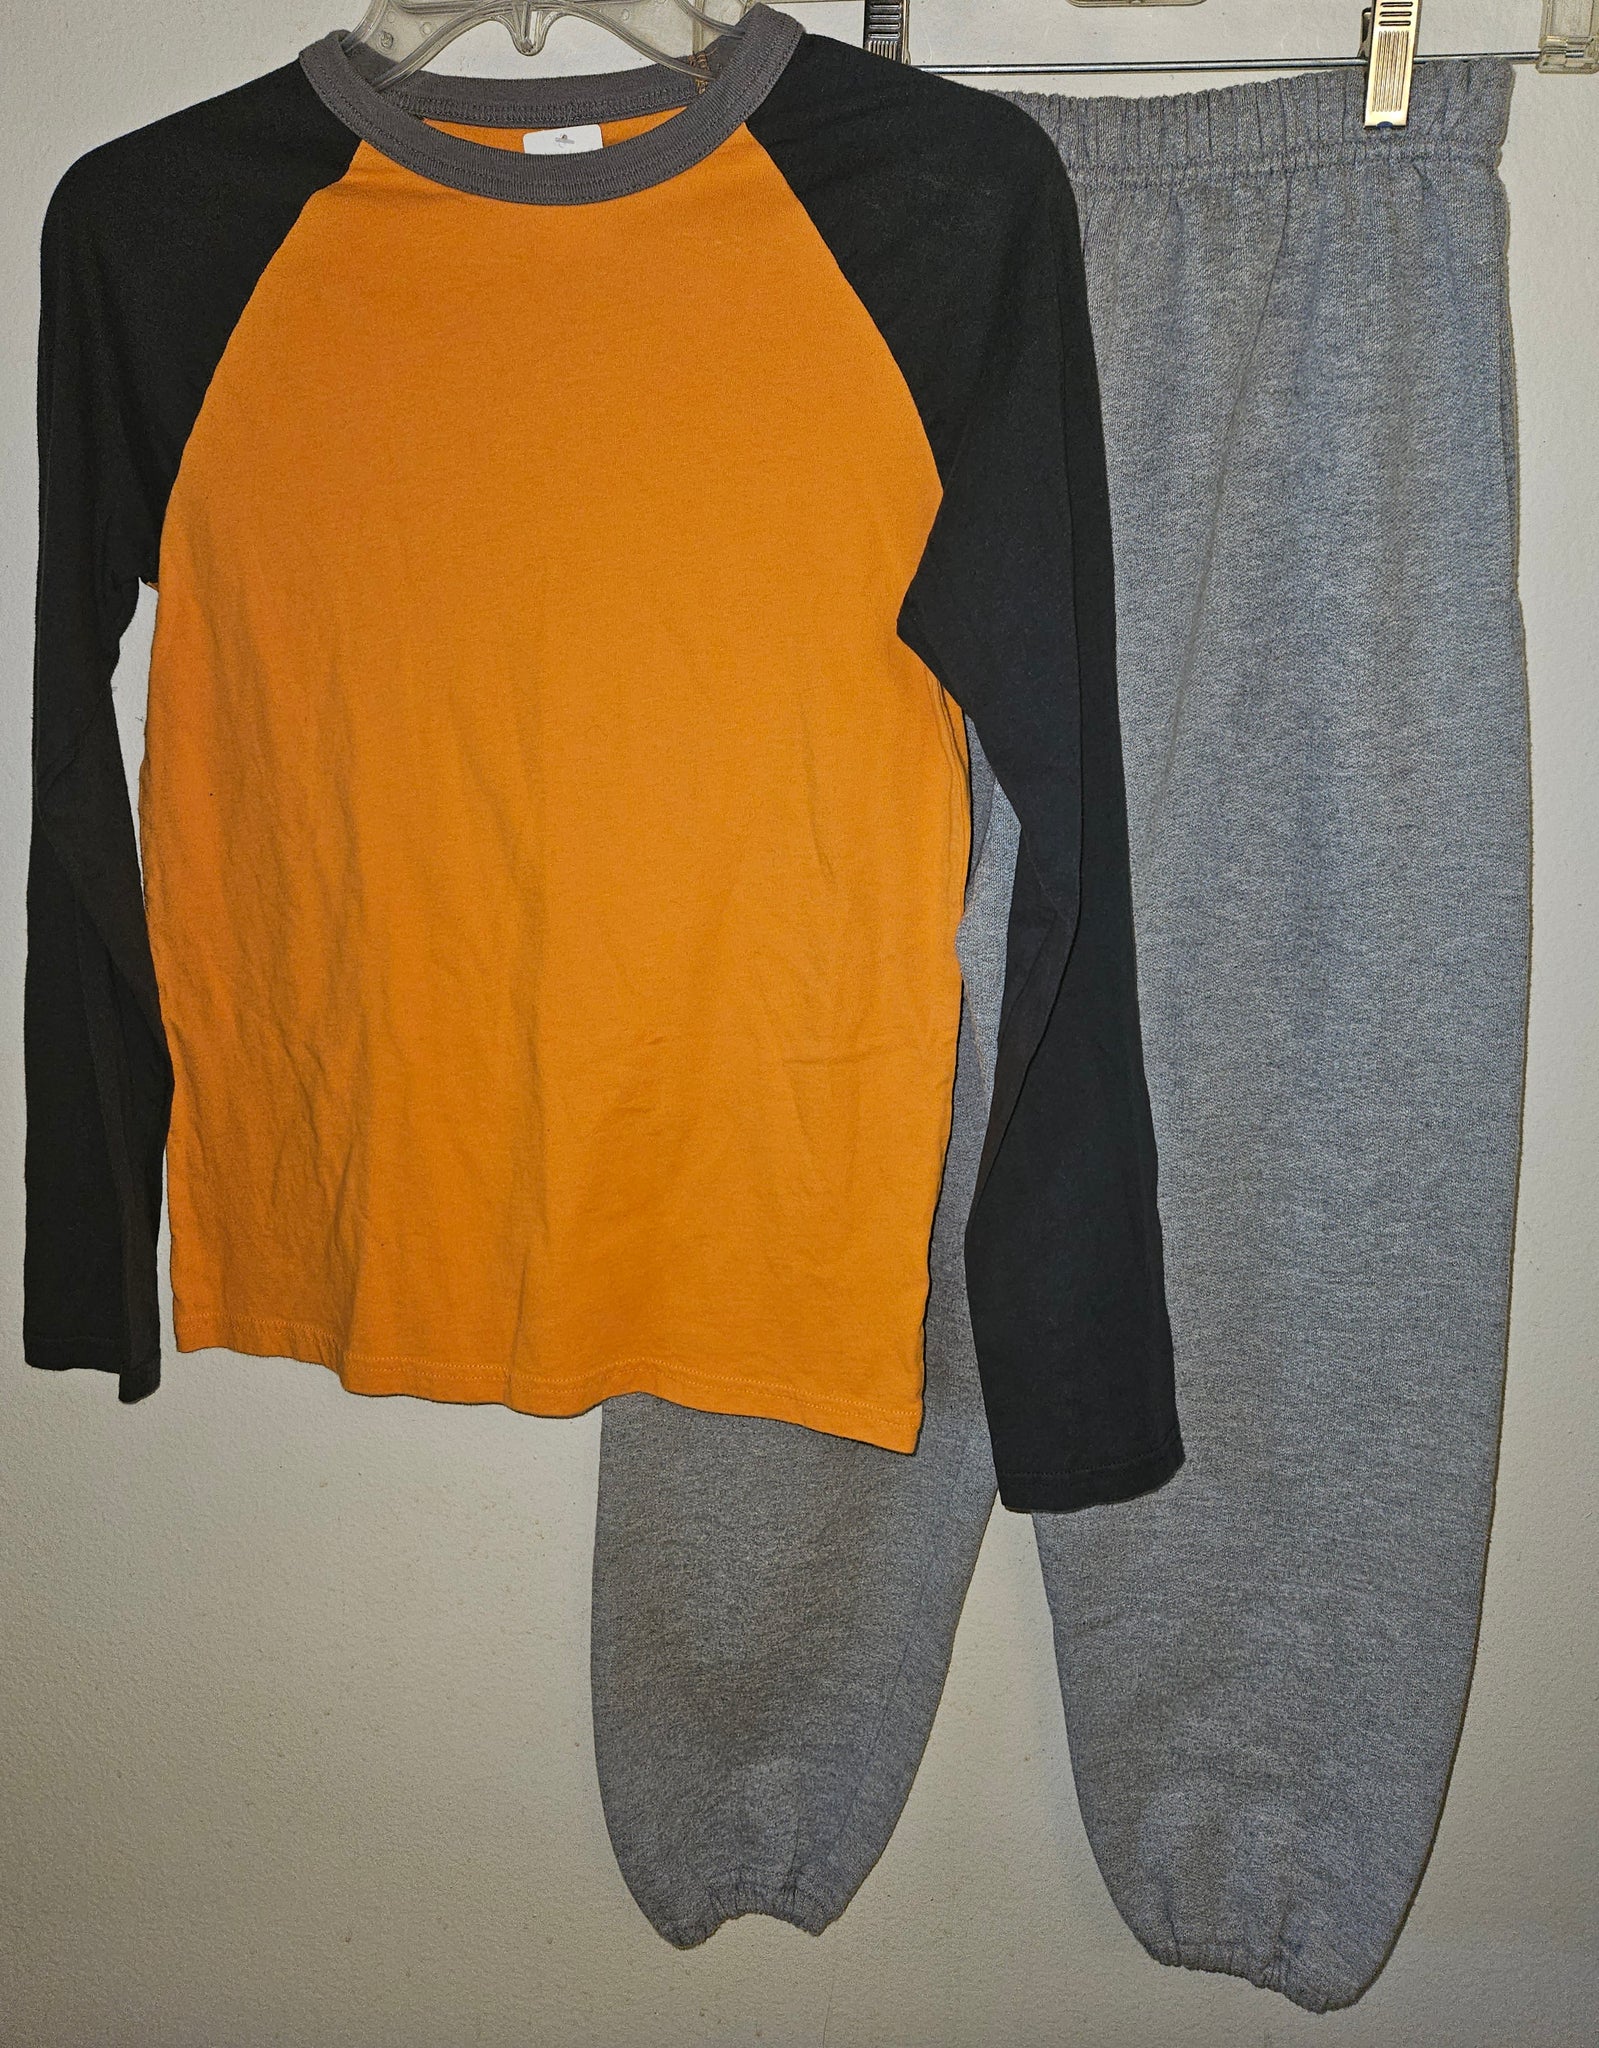 Kids Size 12/14 Large Boys 2-Pc Gray & Orange Outfit